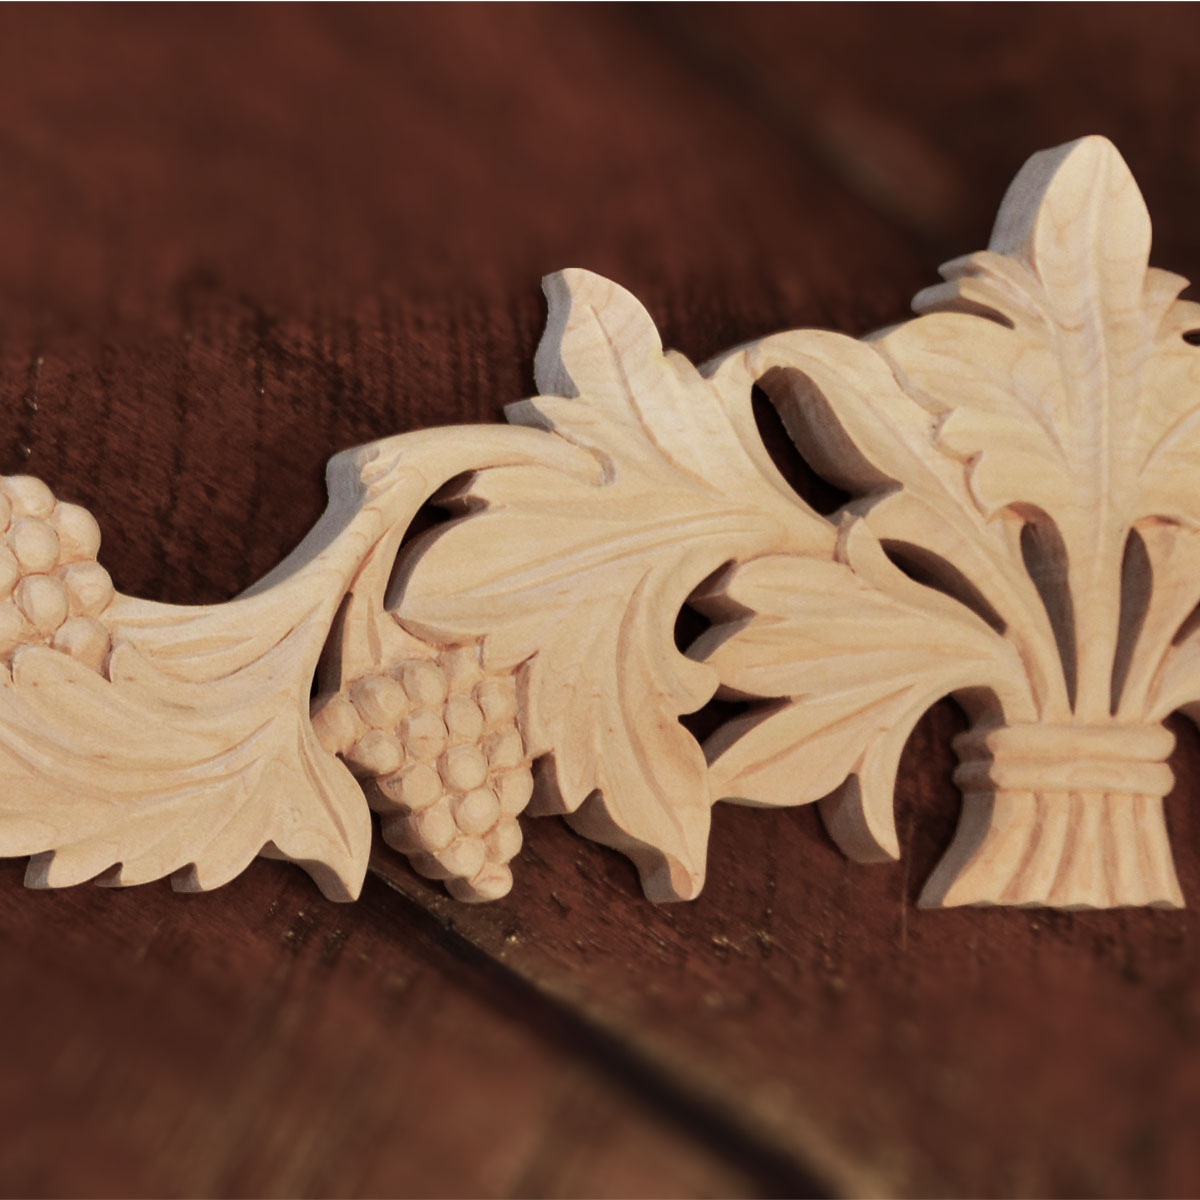 Madera Wood Carving - Wood Carvings - Grape Motif Onlays